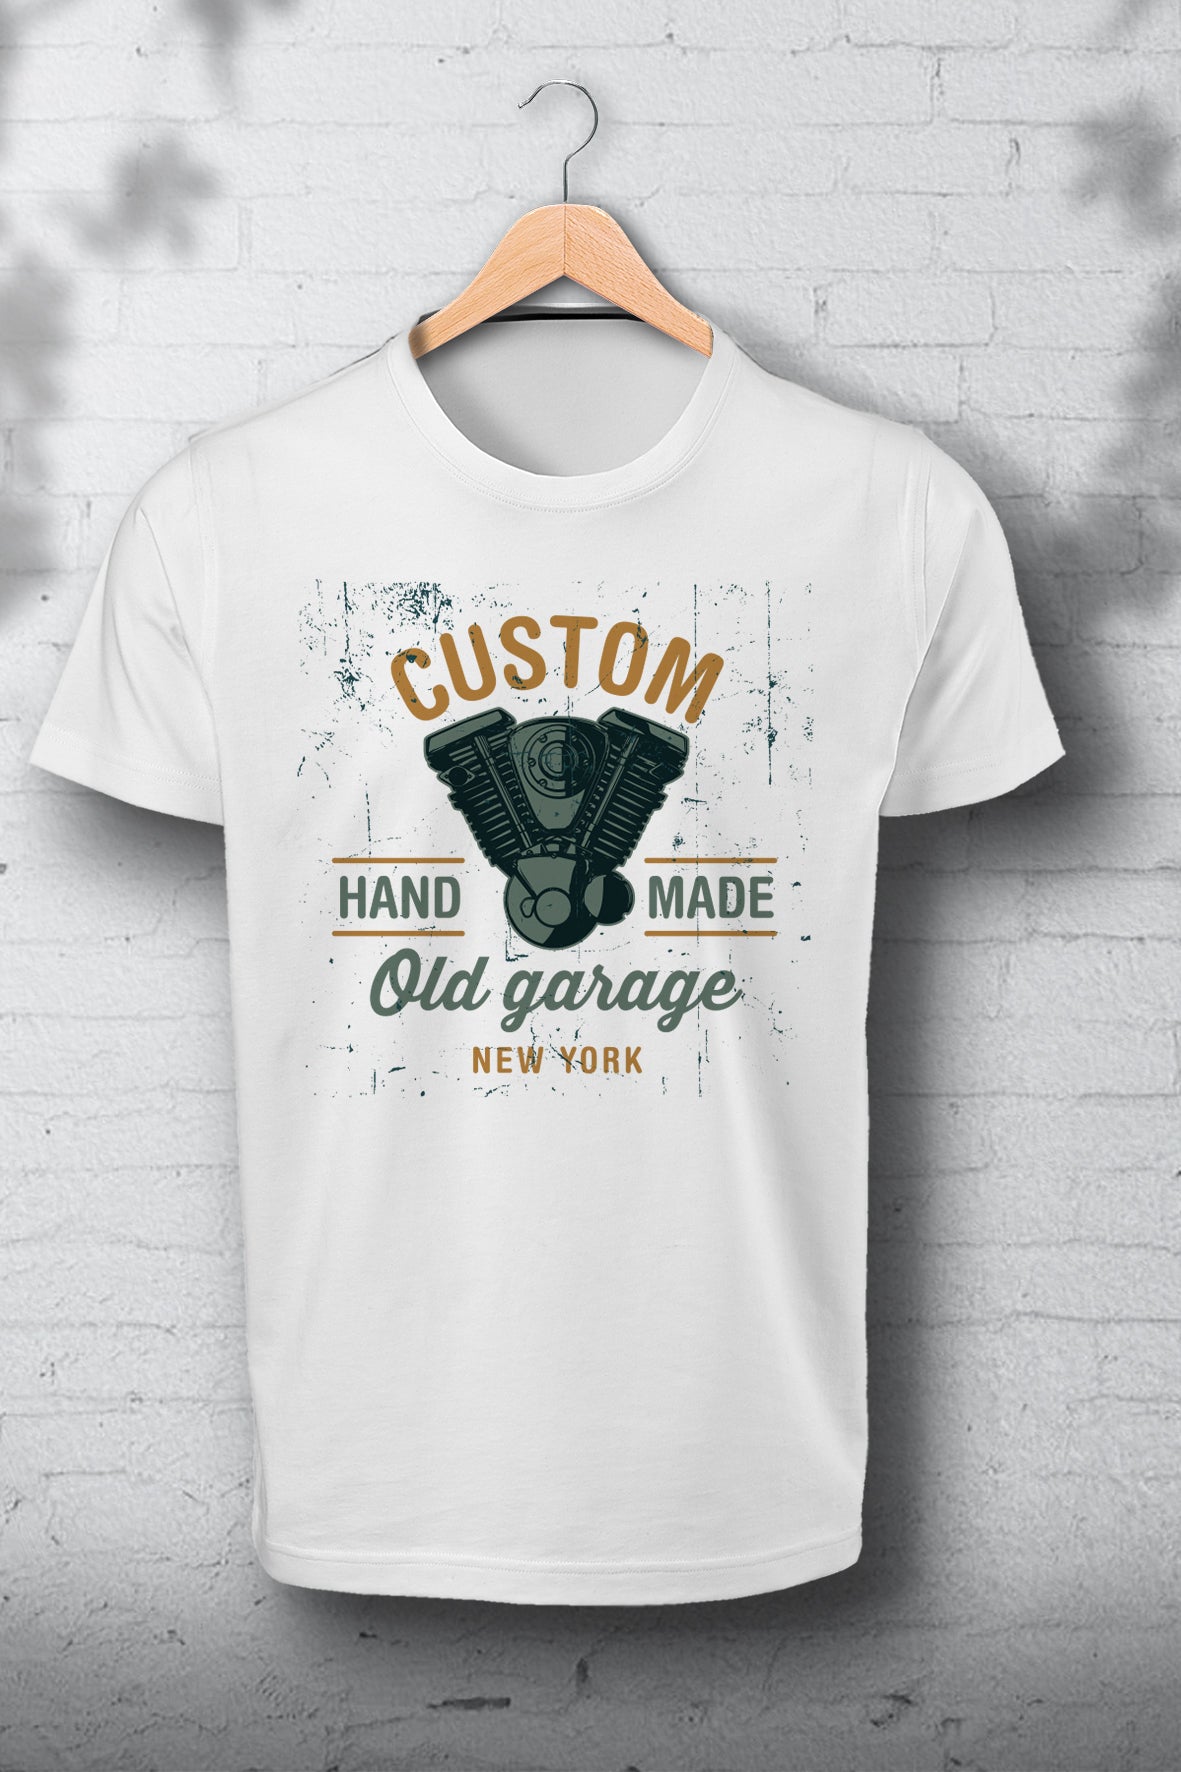 "CUSTOM OLD GARAGE" T-shirt